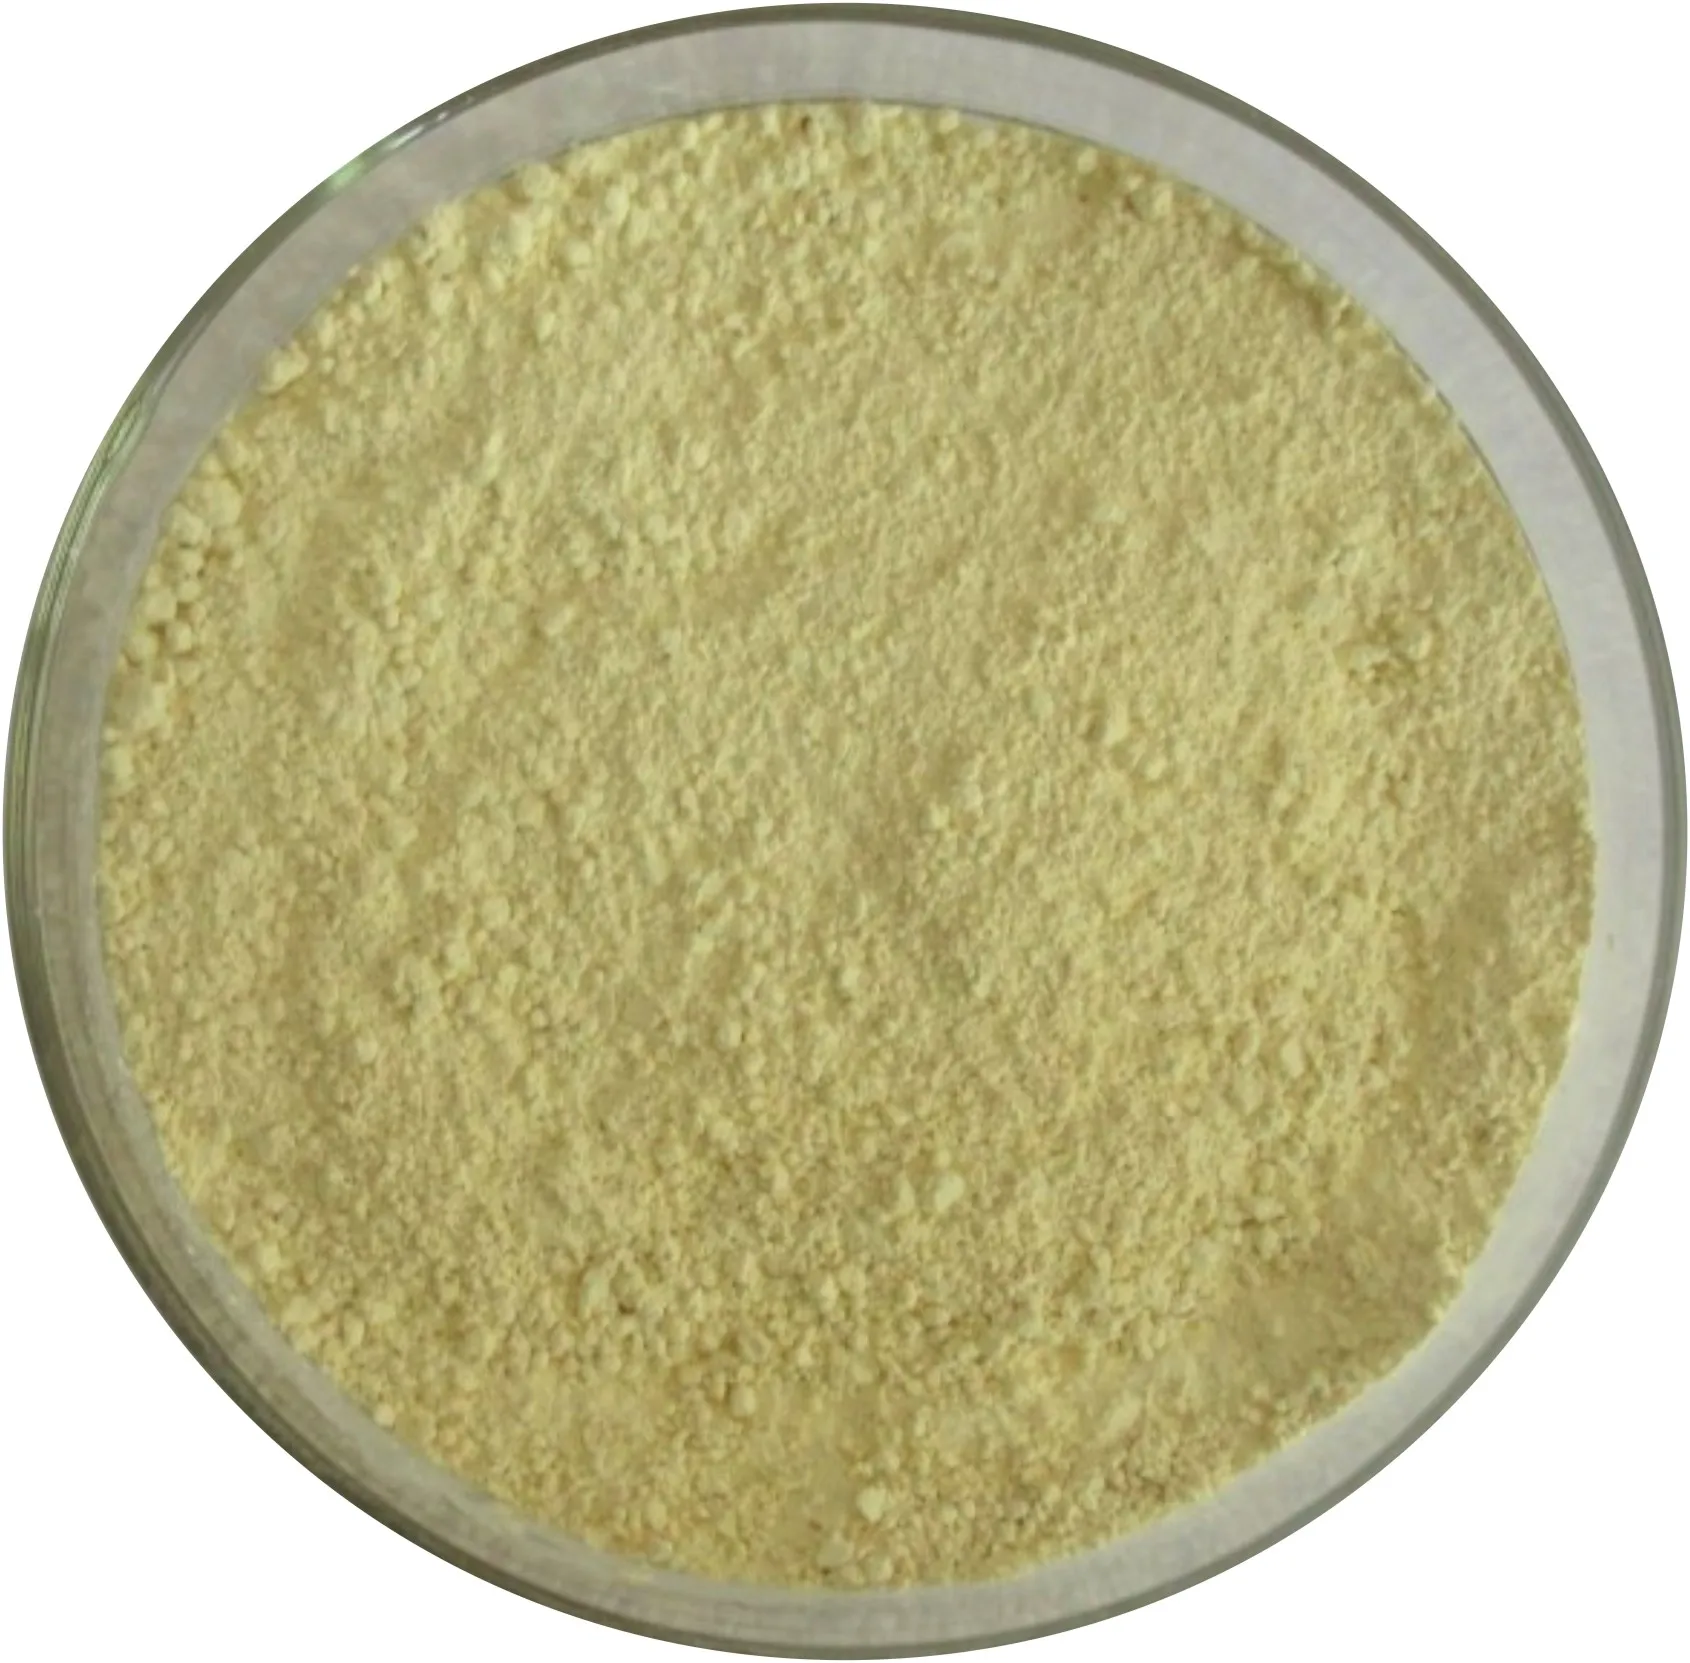 Sophora Japonica Extract luteolin powder 98% CAS 491-70-3